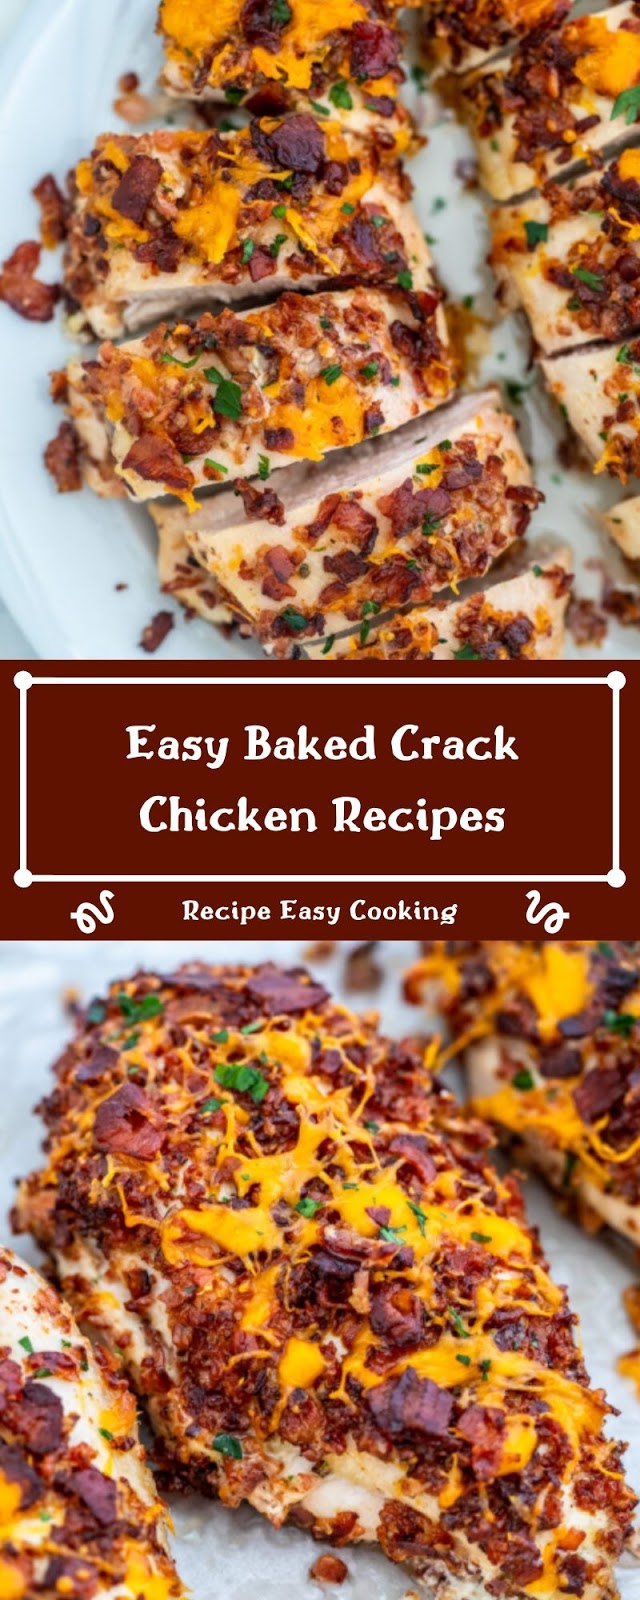 Easy Baked Crack Chicken Recipes